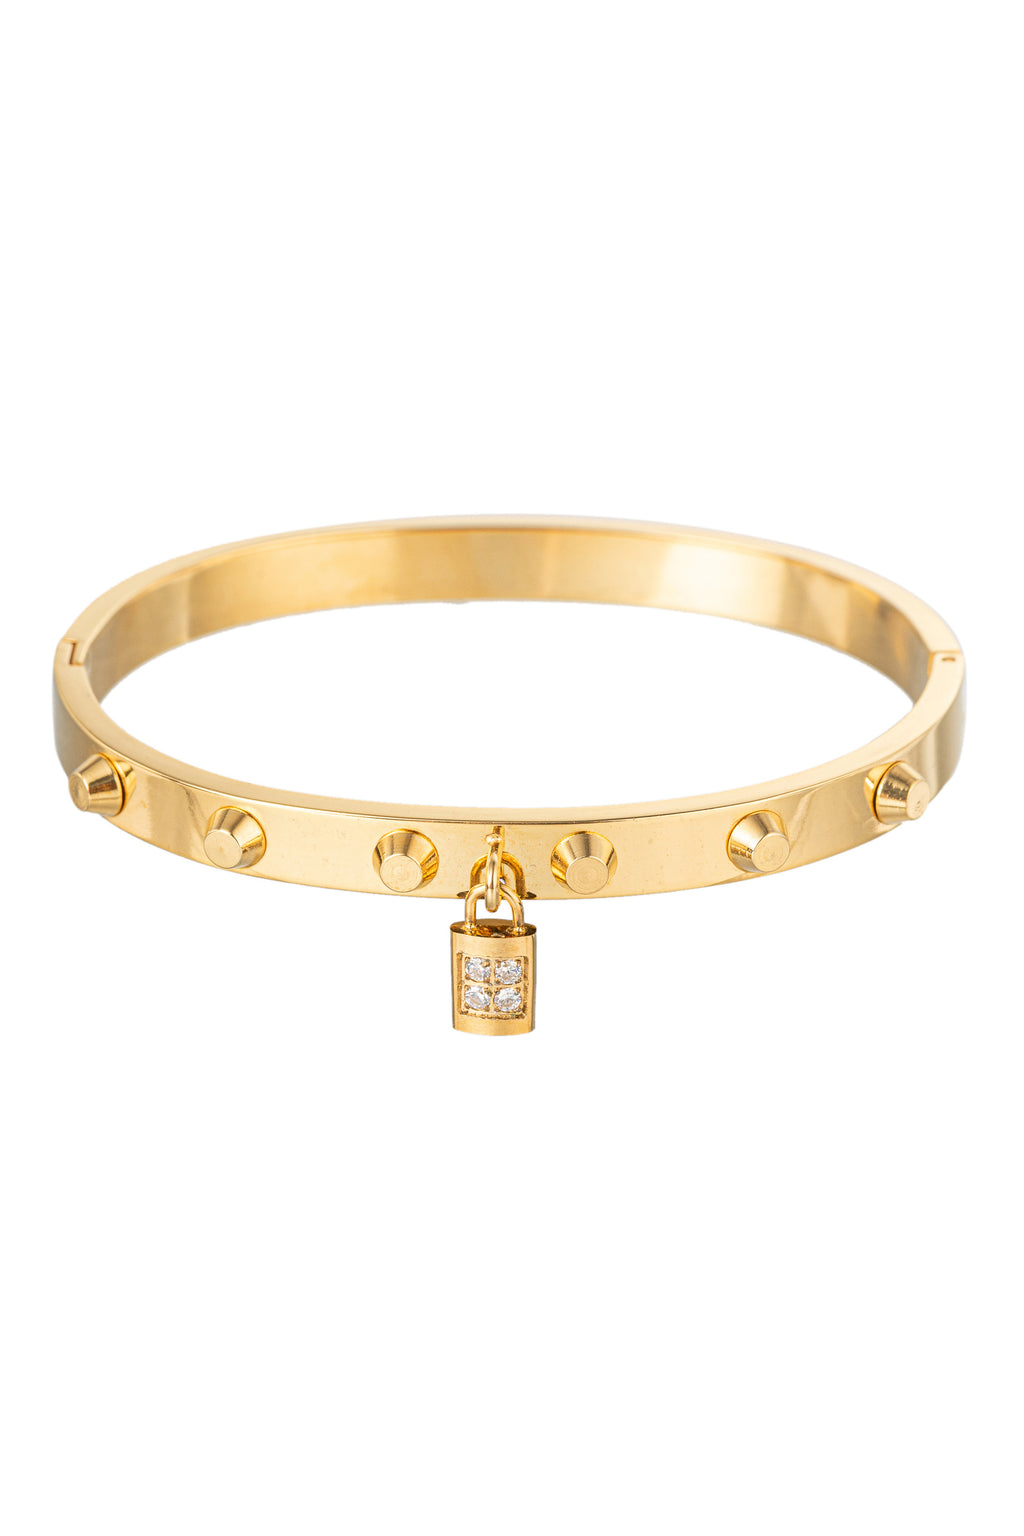 Gold tone titanium CZ crystal studded cuff bracelet.